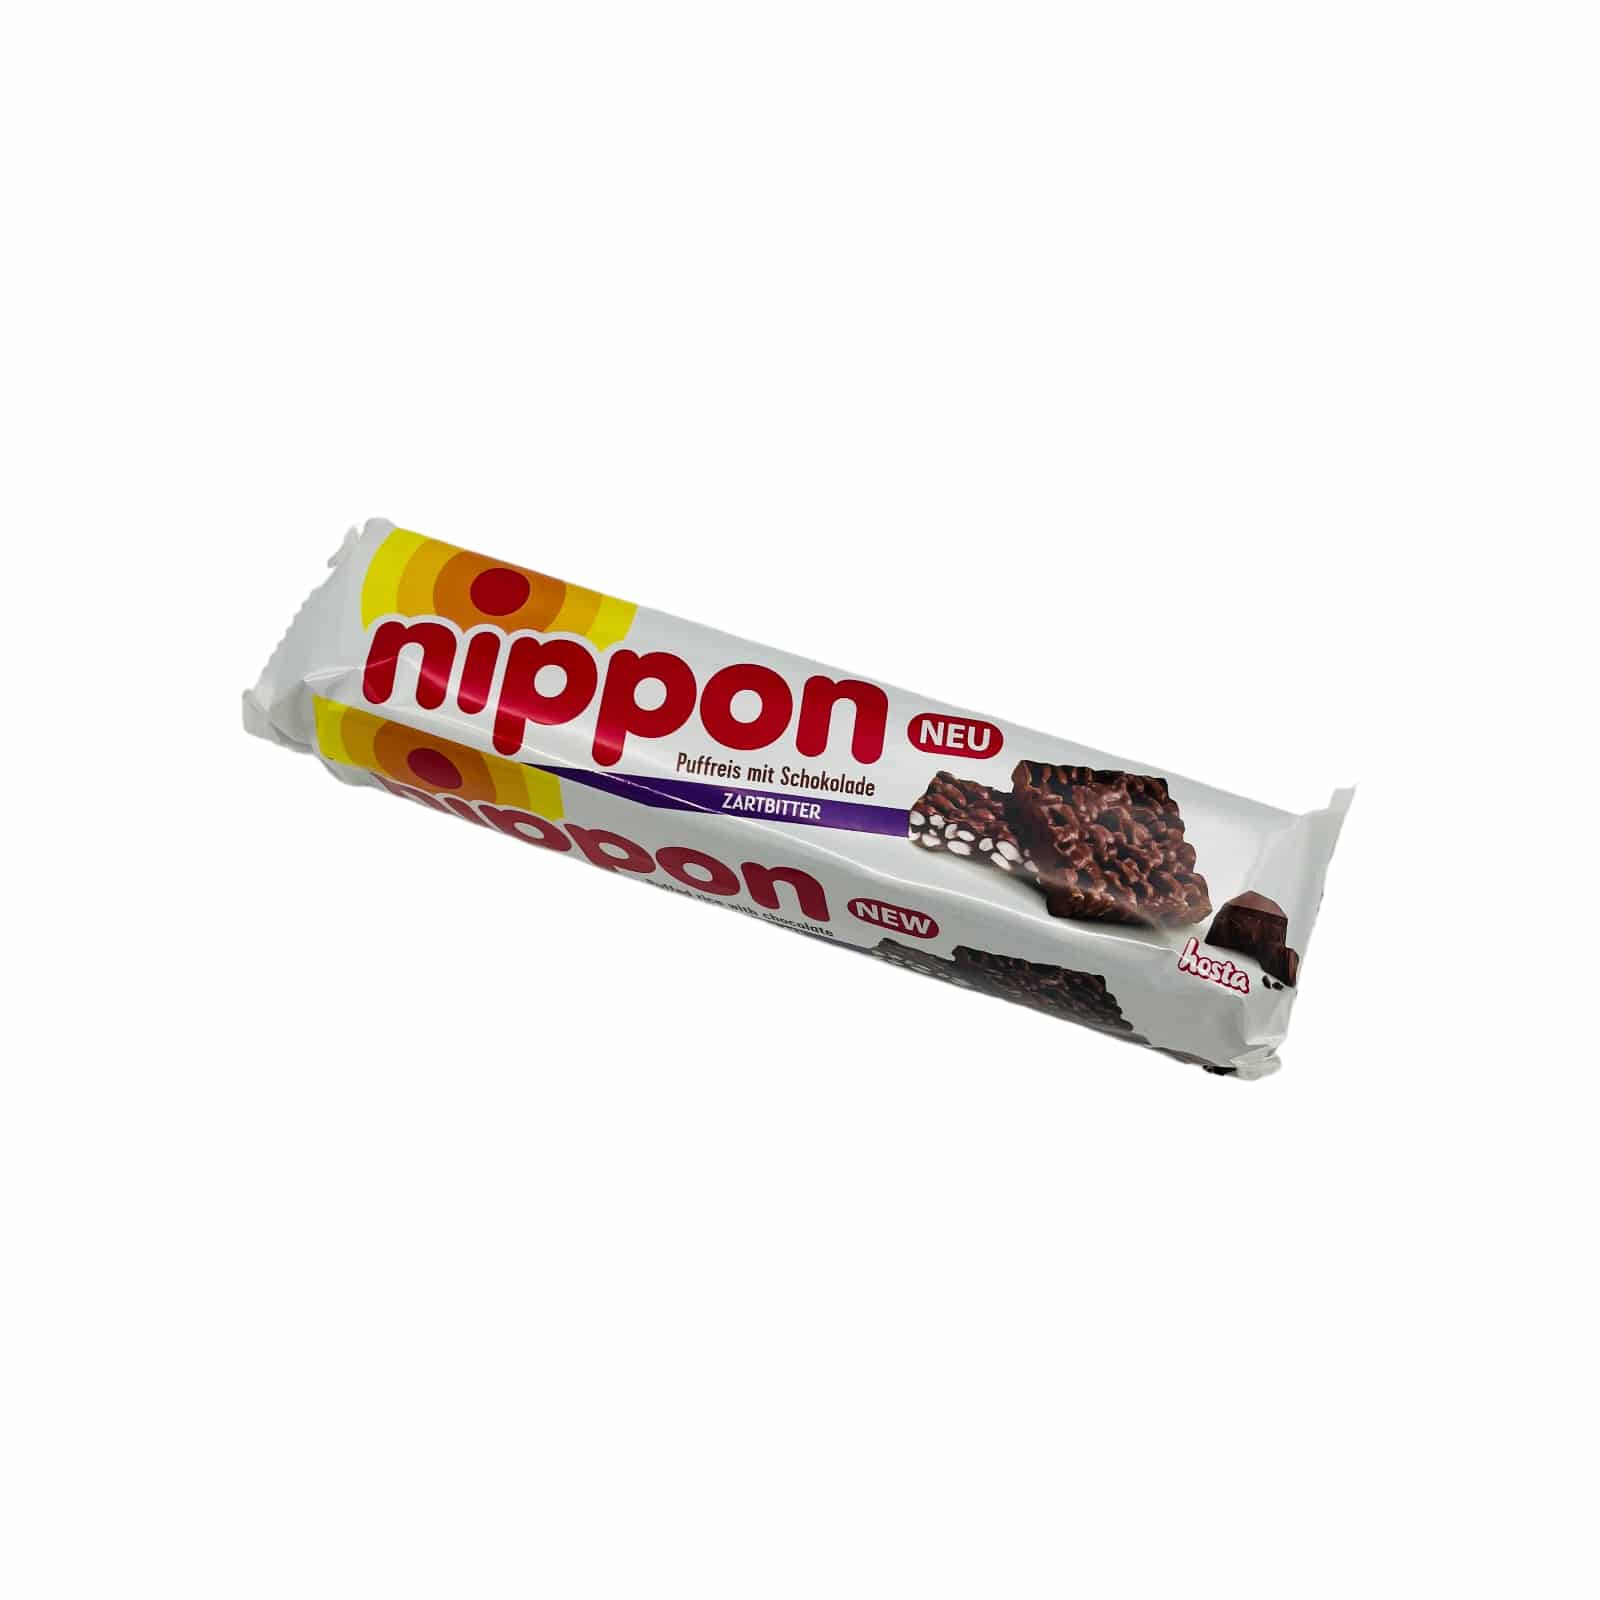 Nippon Puffreis Milchschokolade 200g